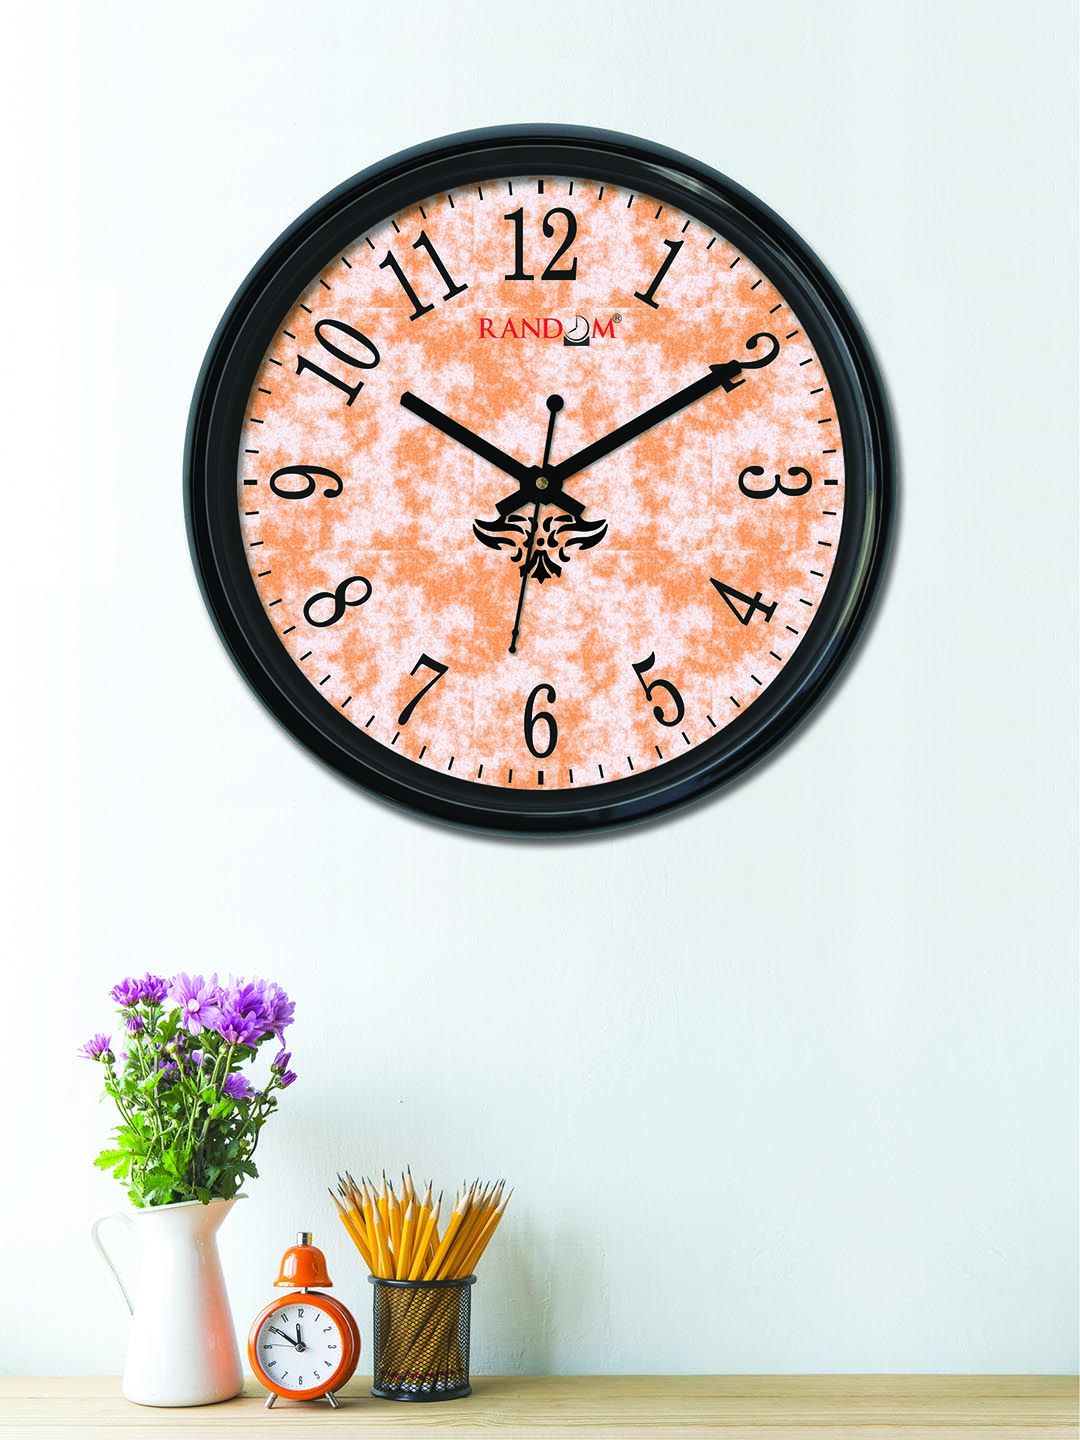 RANDOM Orange Round Printed Analogue Wall Clock 30 cm Price in India